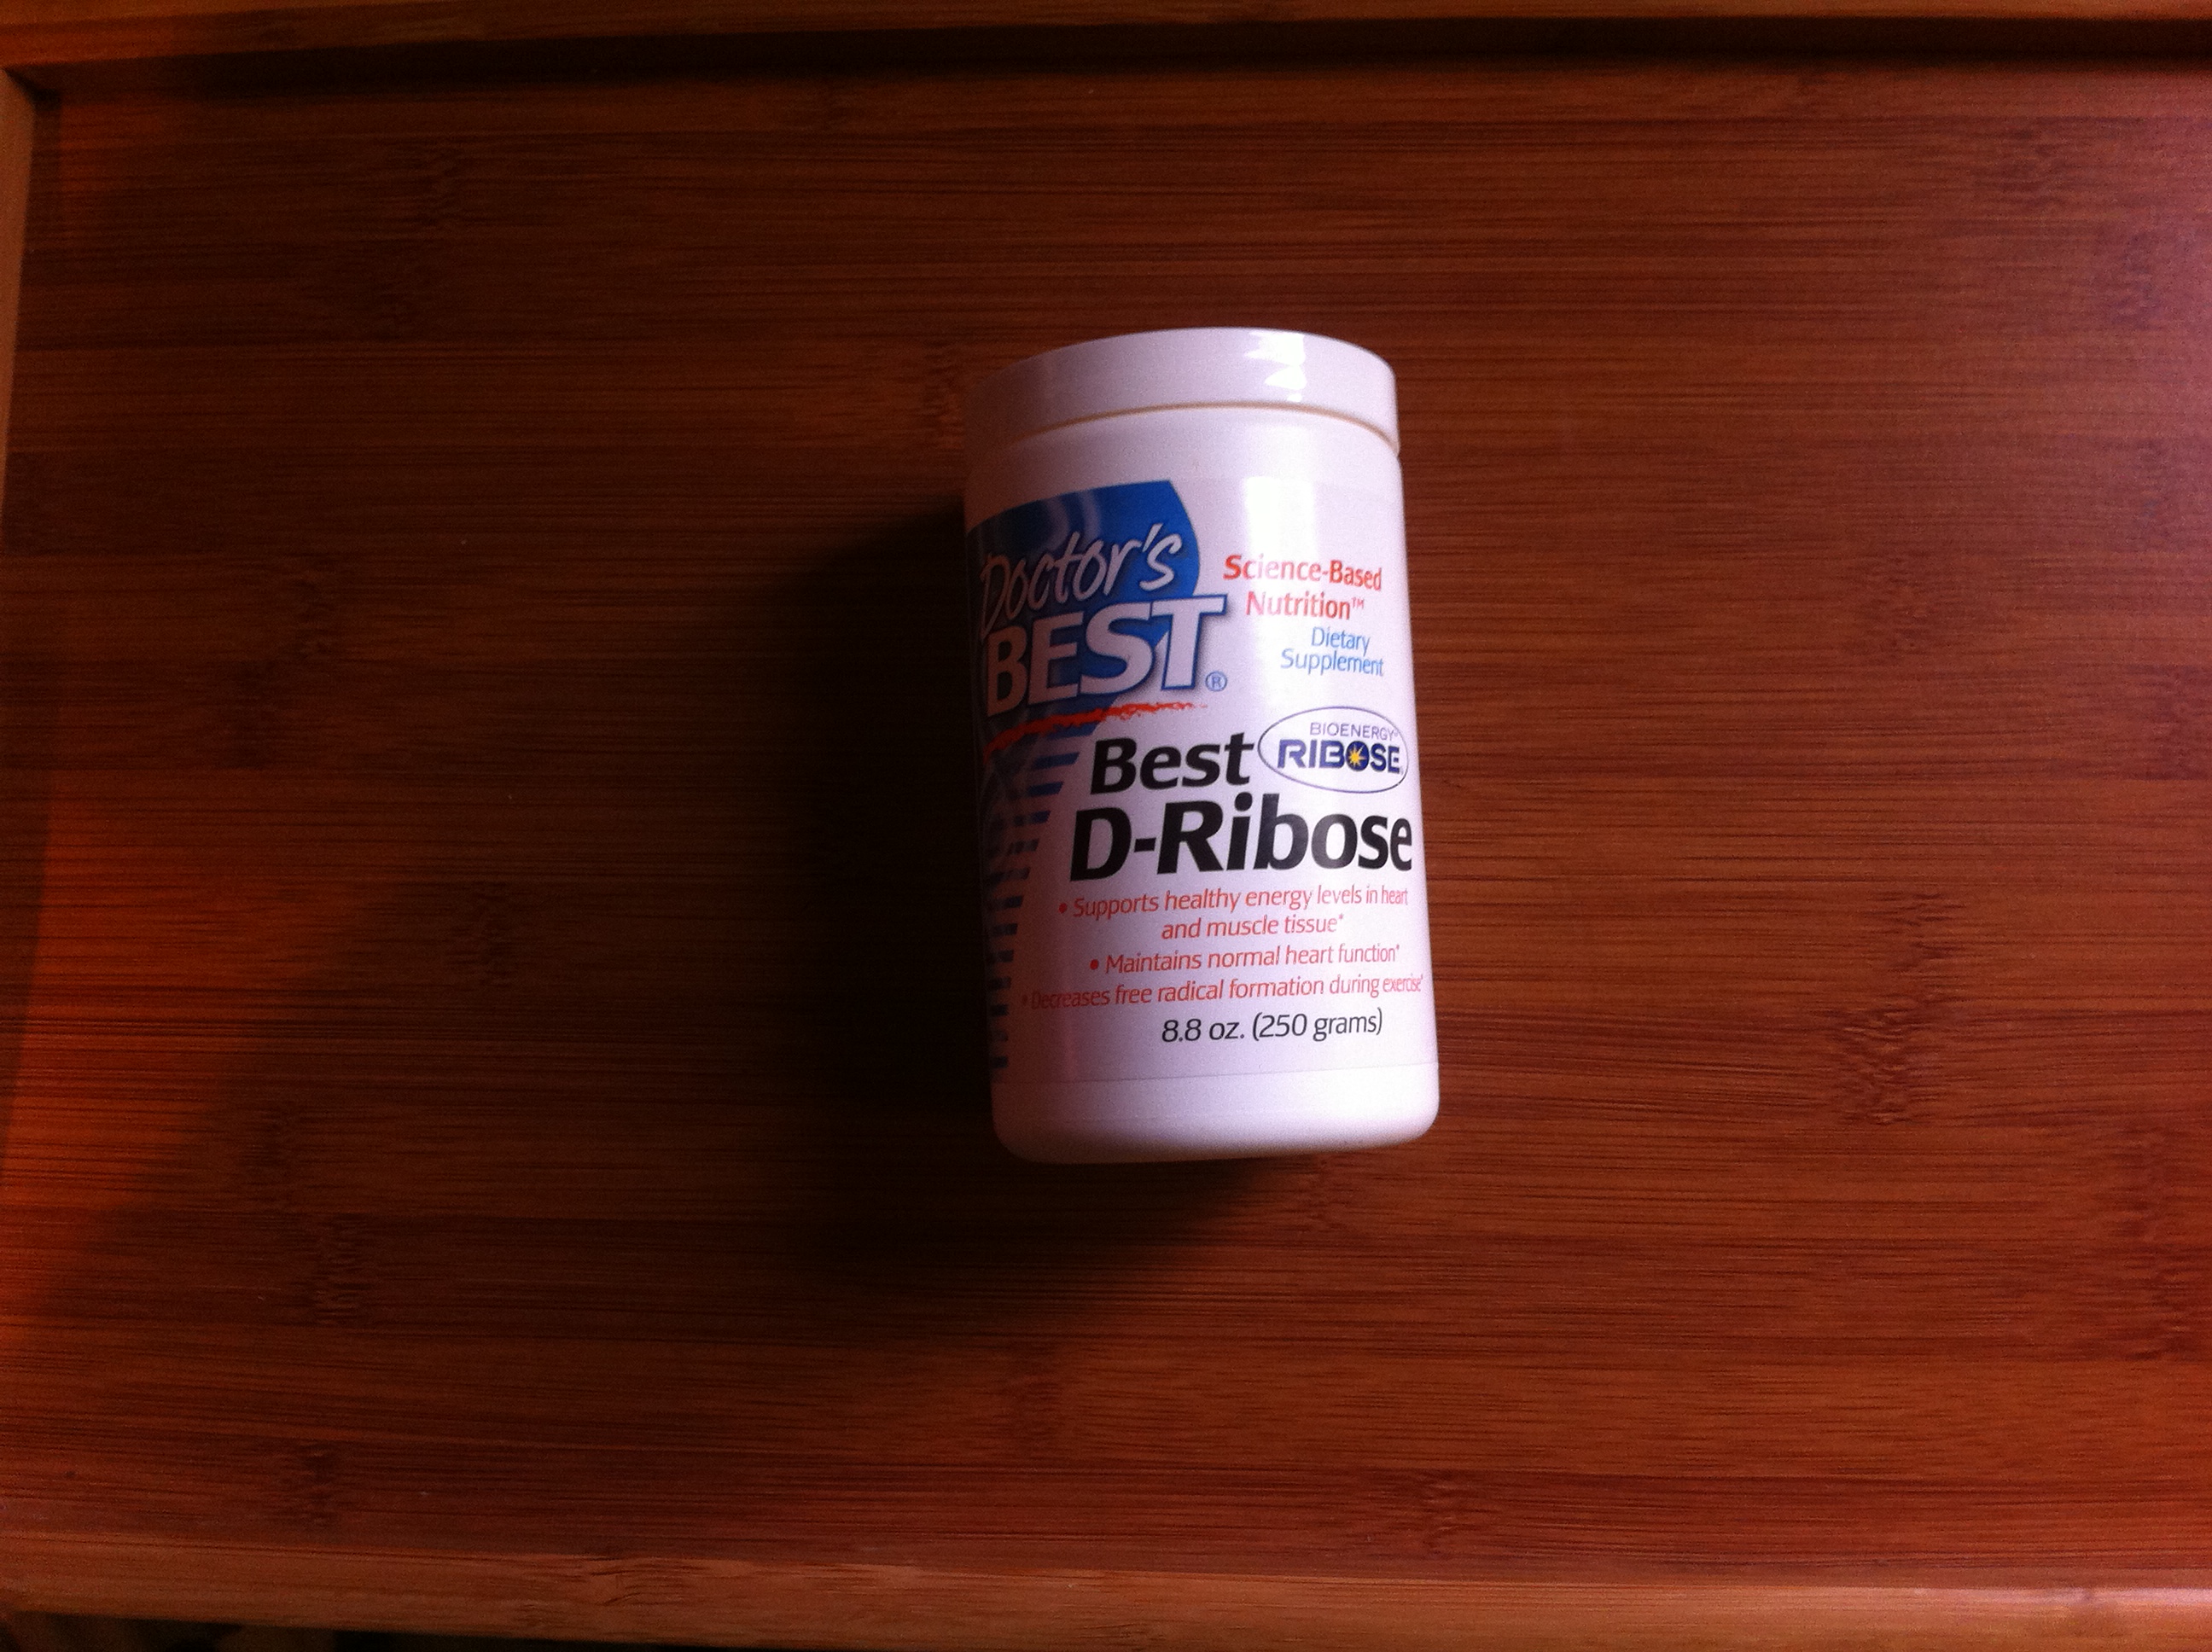 Nutrition D-Ribose